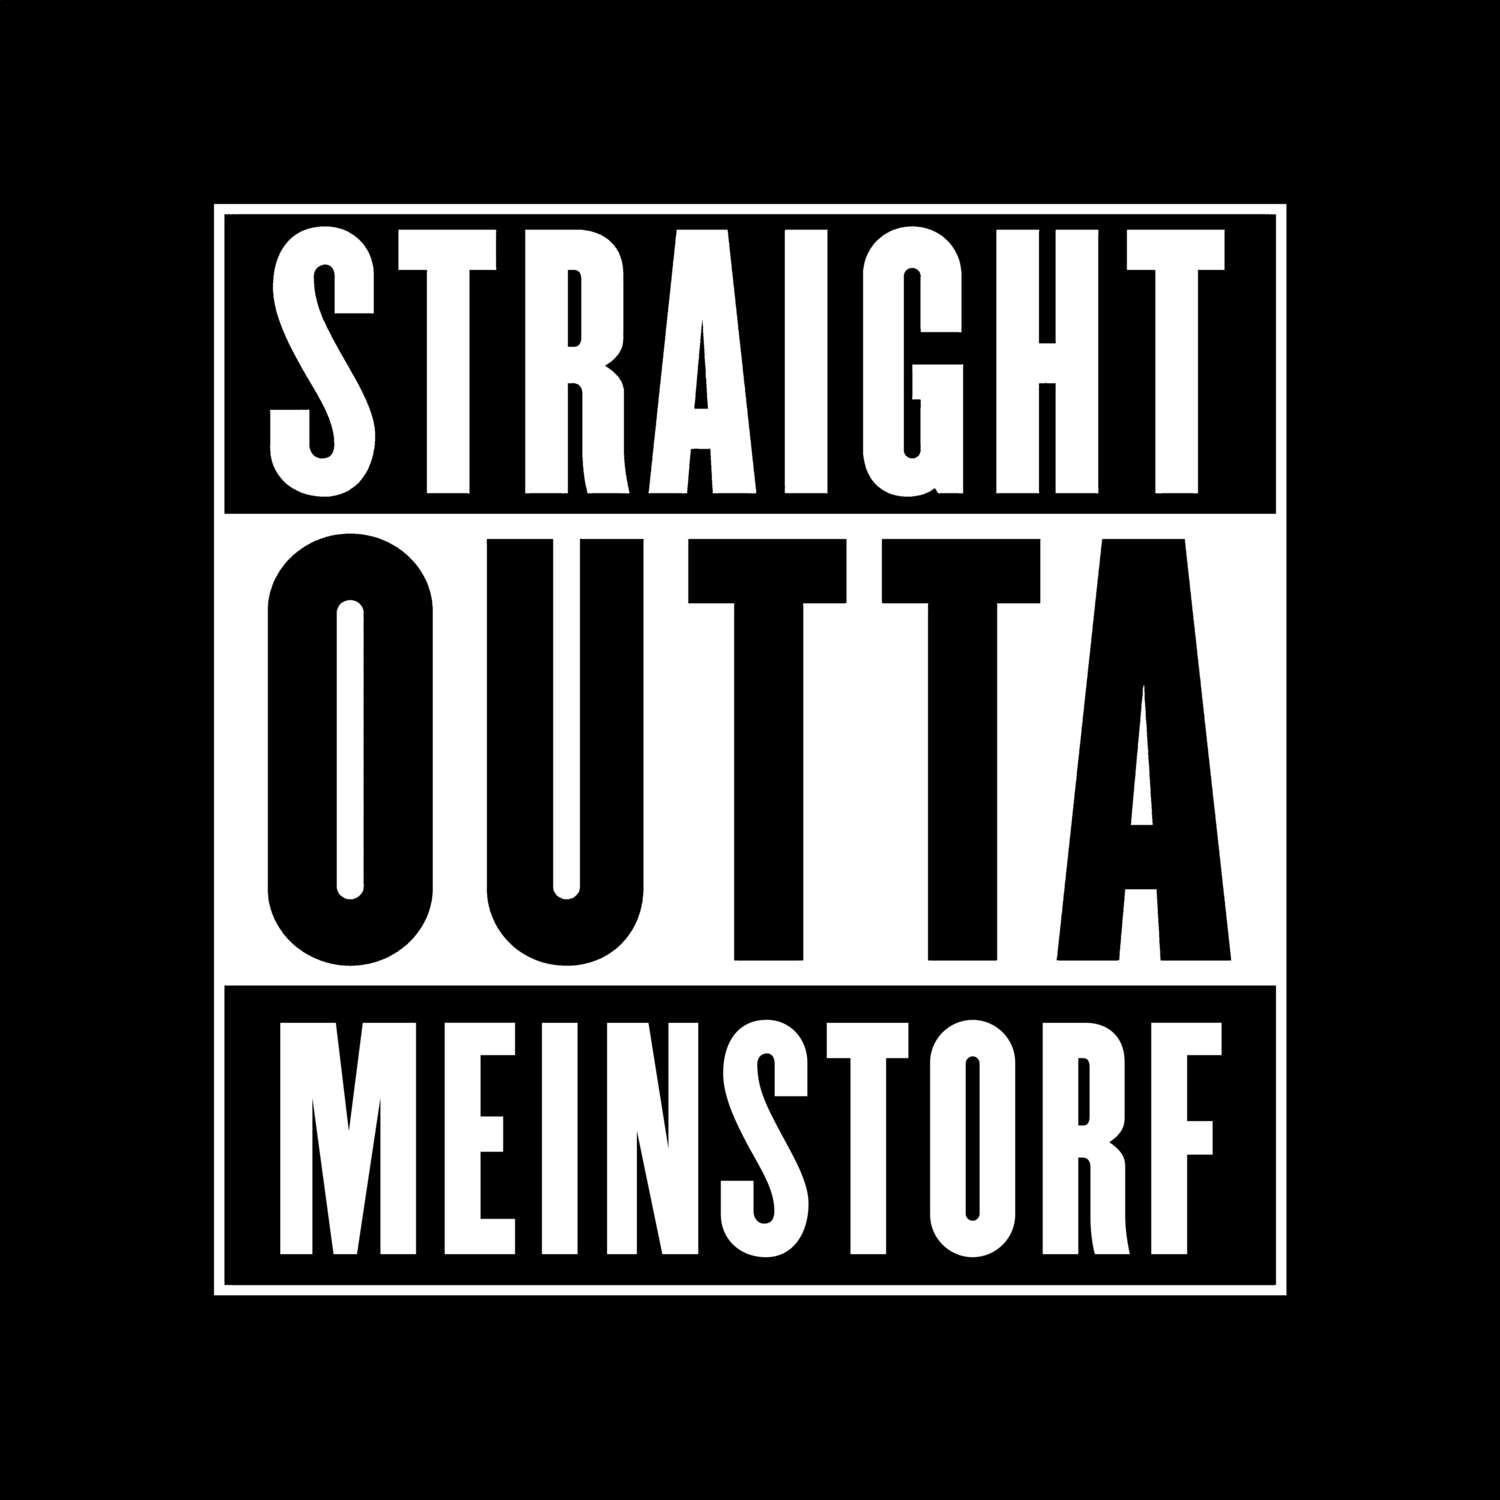 Meinstorf T-Shirt »Straight Outta«